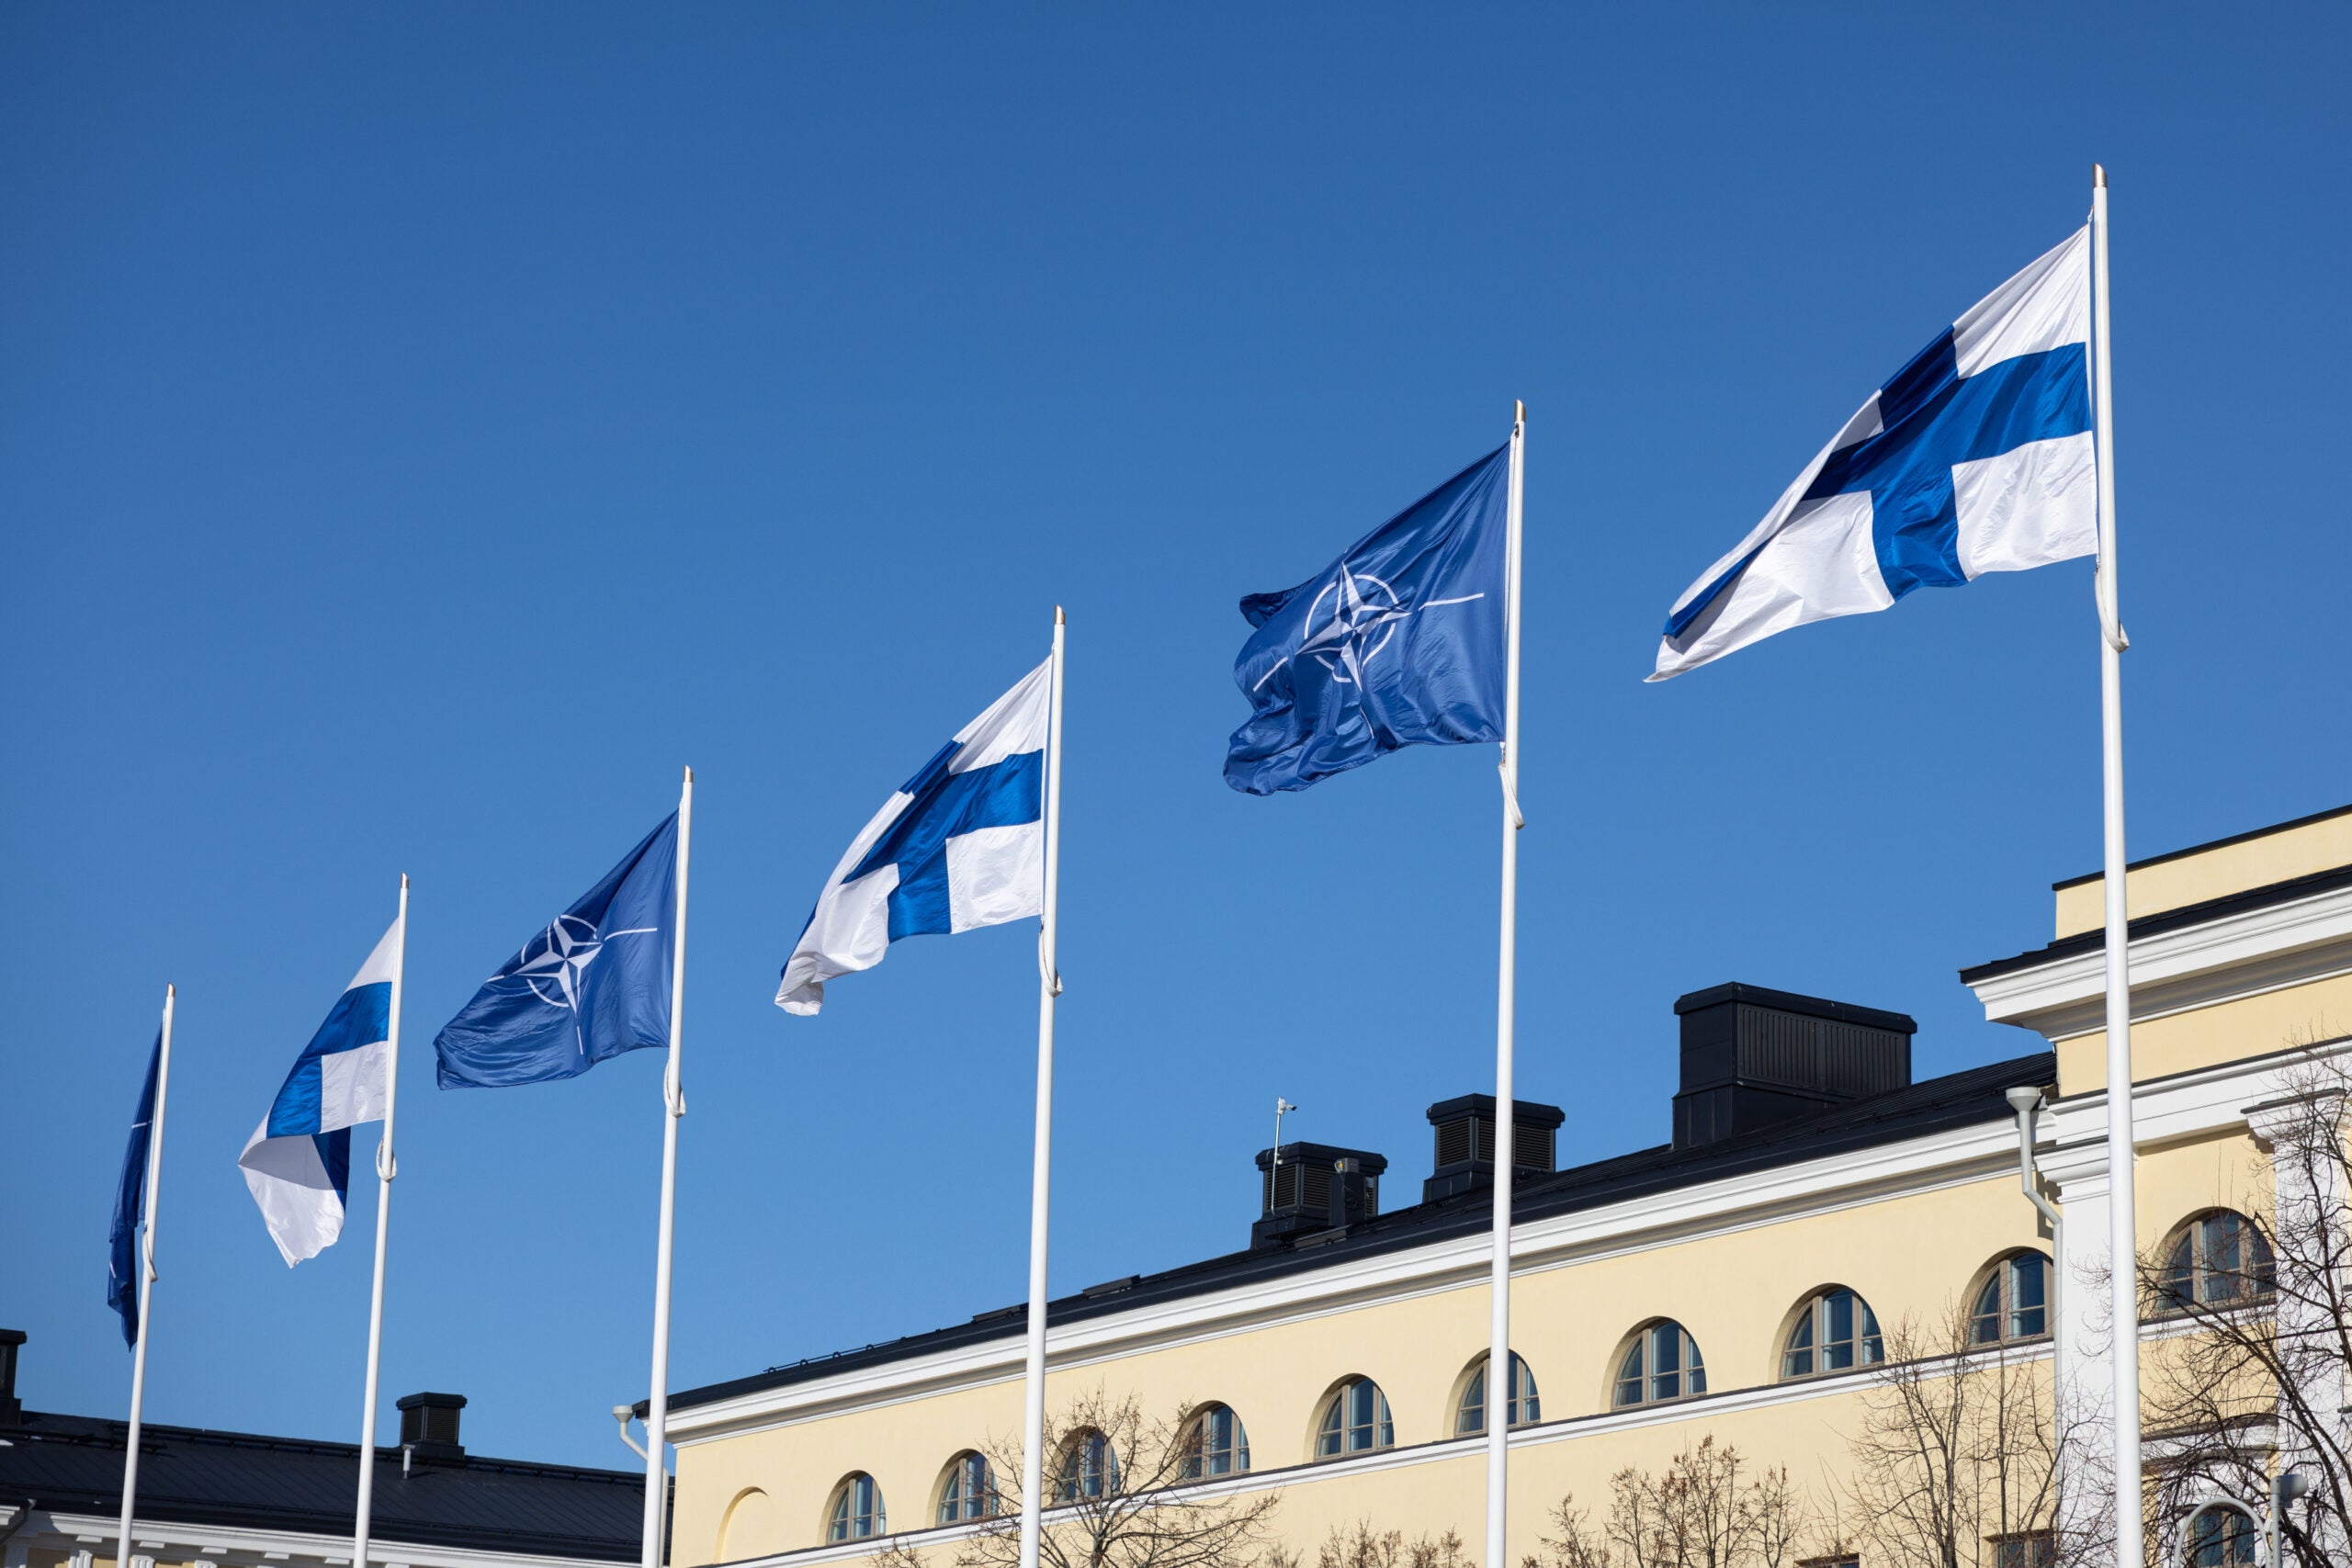 Финляндия входит в кризис: конфликт с Россией и членство в НАТО добивают прежнее благополучие